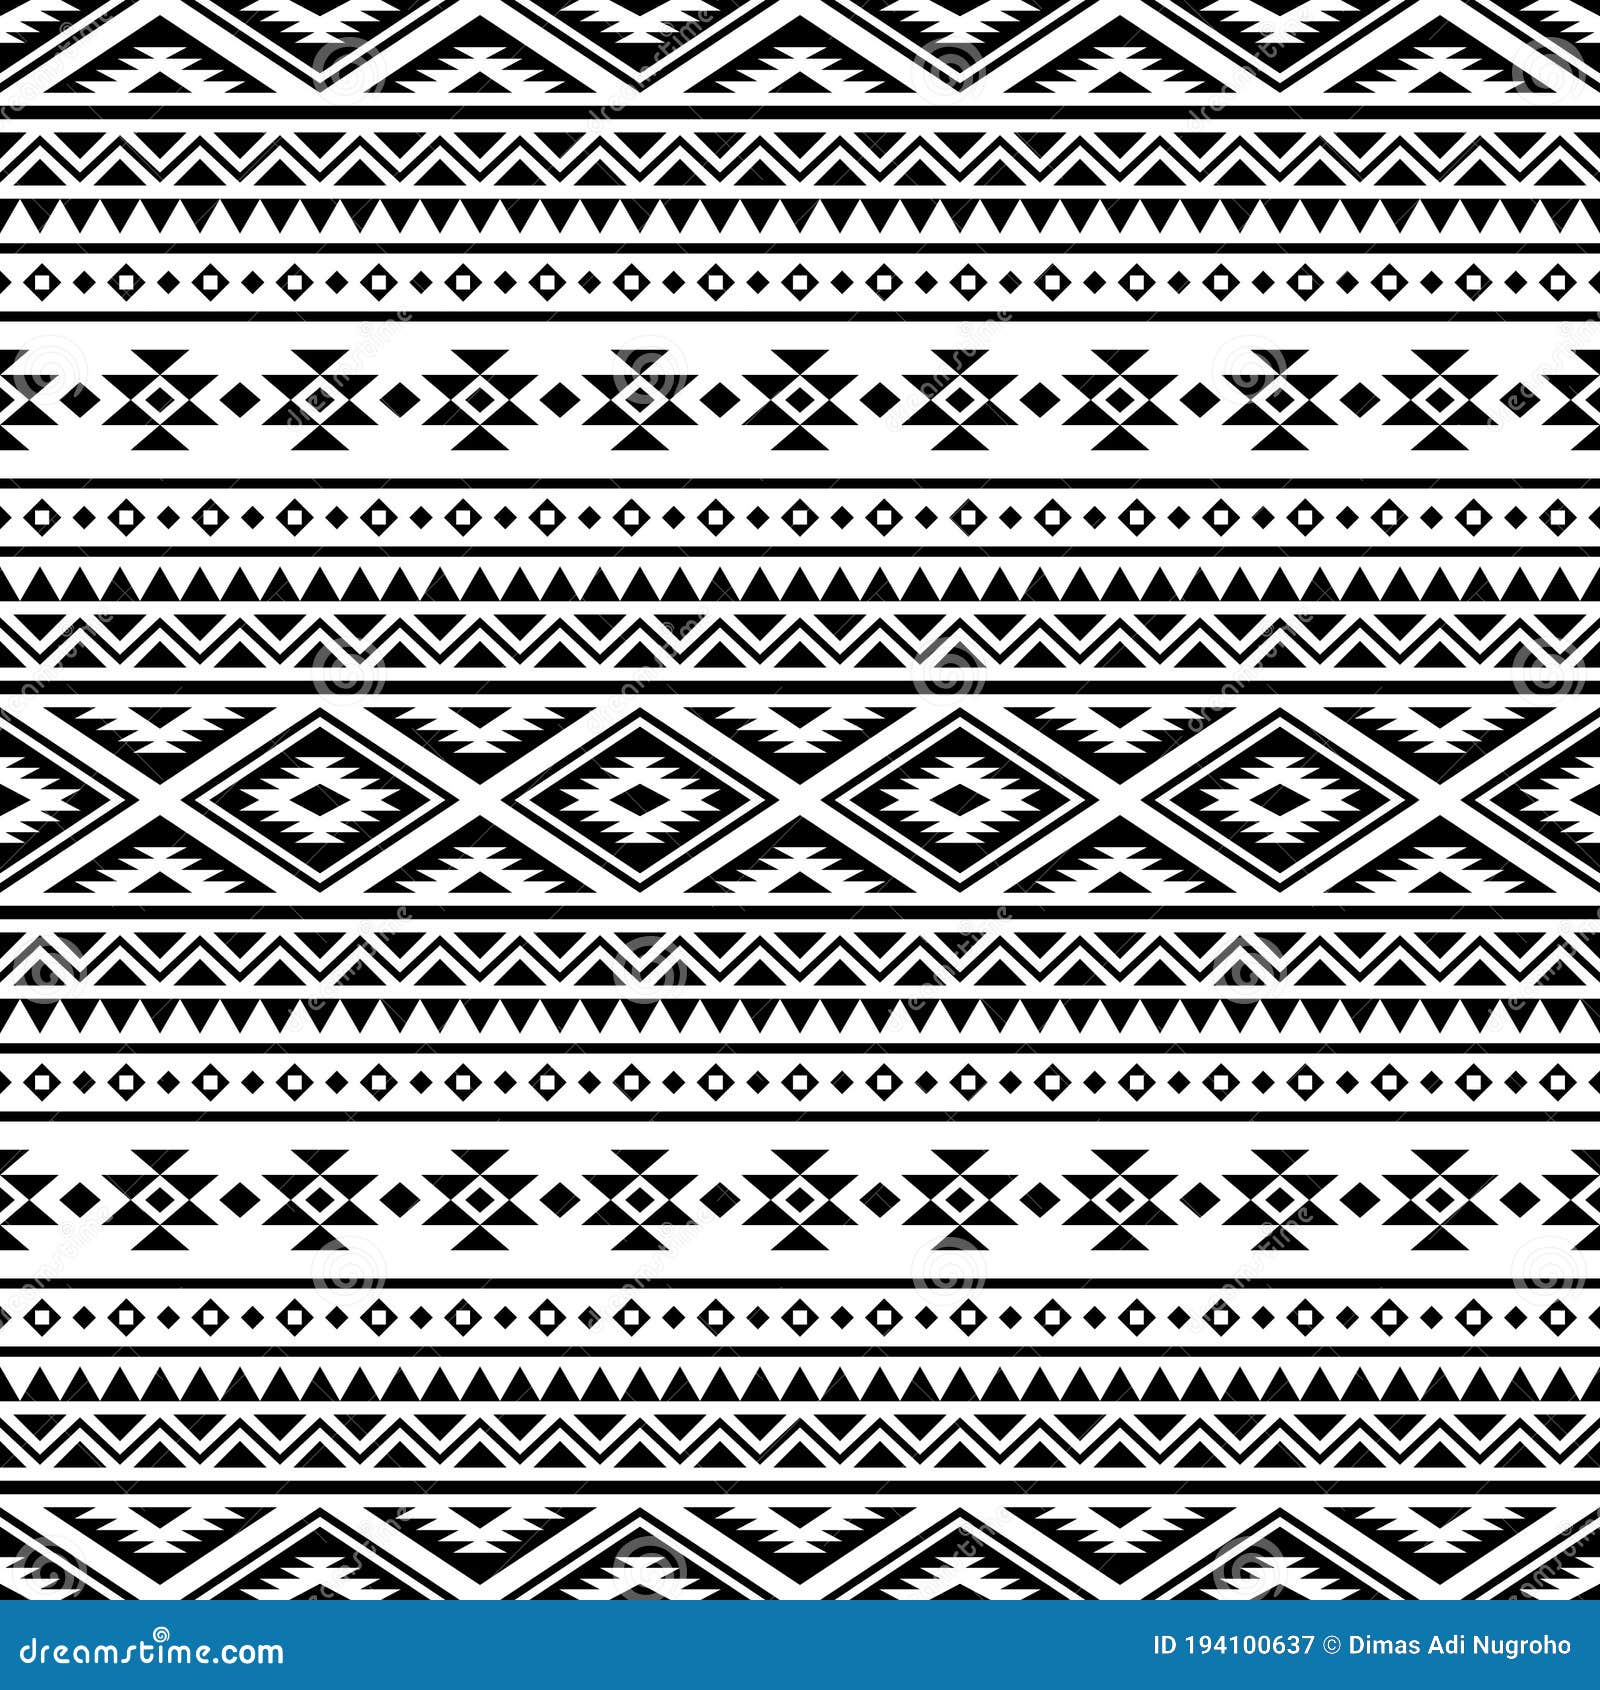 Ikat Aztec Ethnic Seamless Pattern Background Design Stock Vector ...